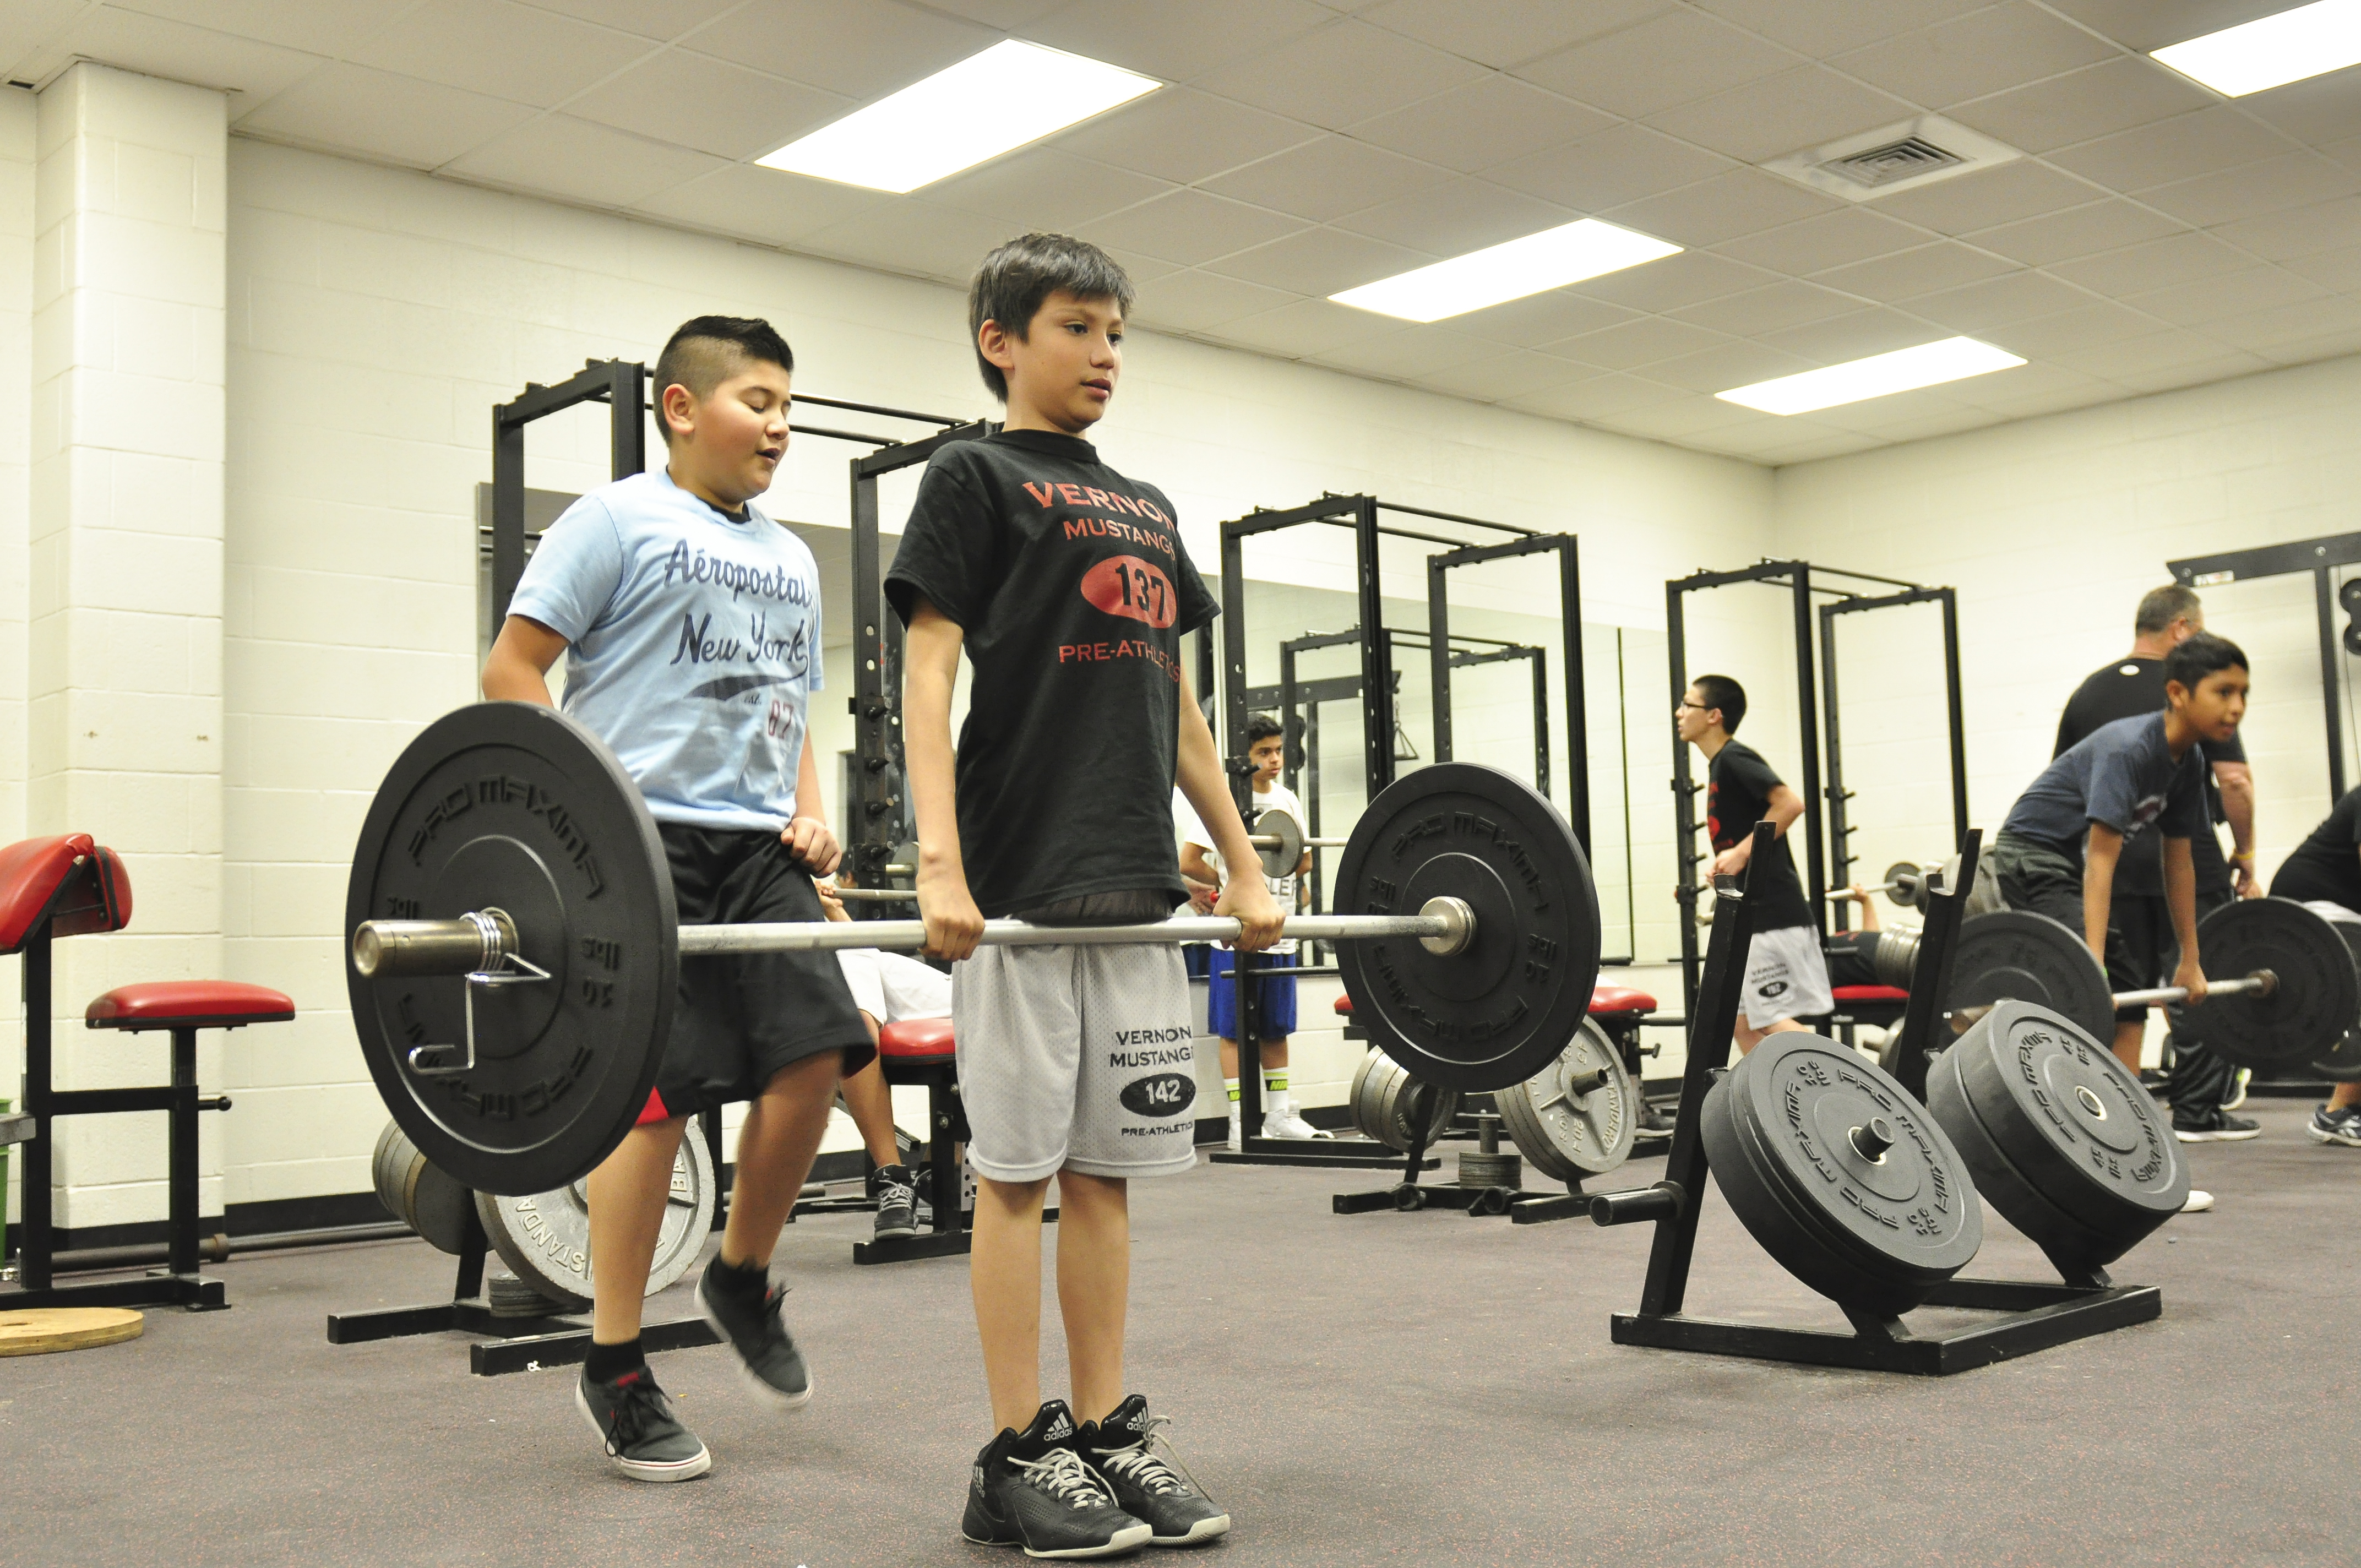 Sixth grade students explore UIL sports through pre-athletics program